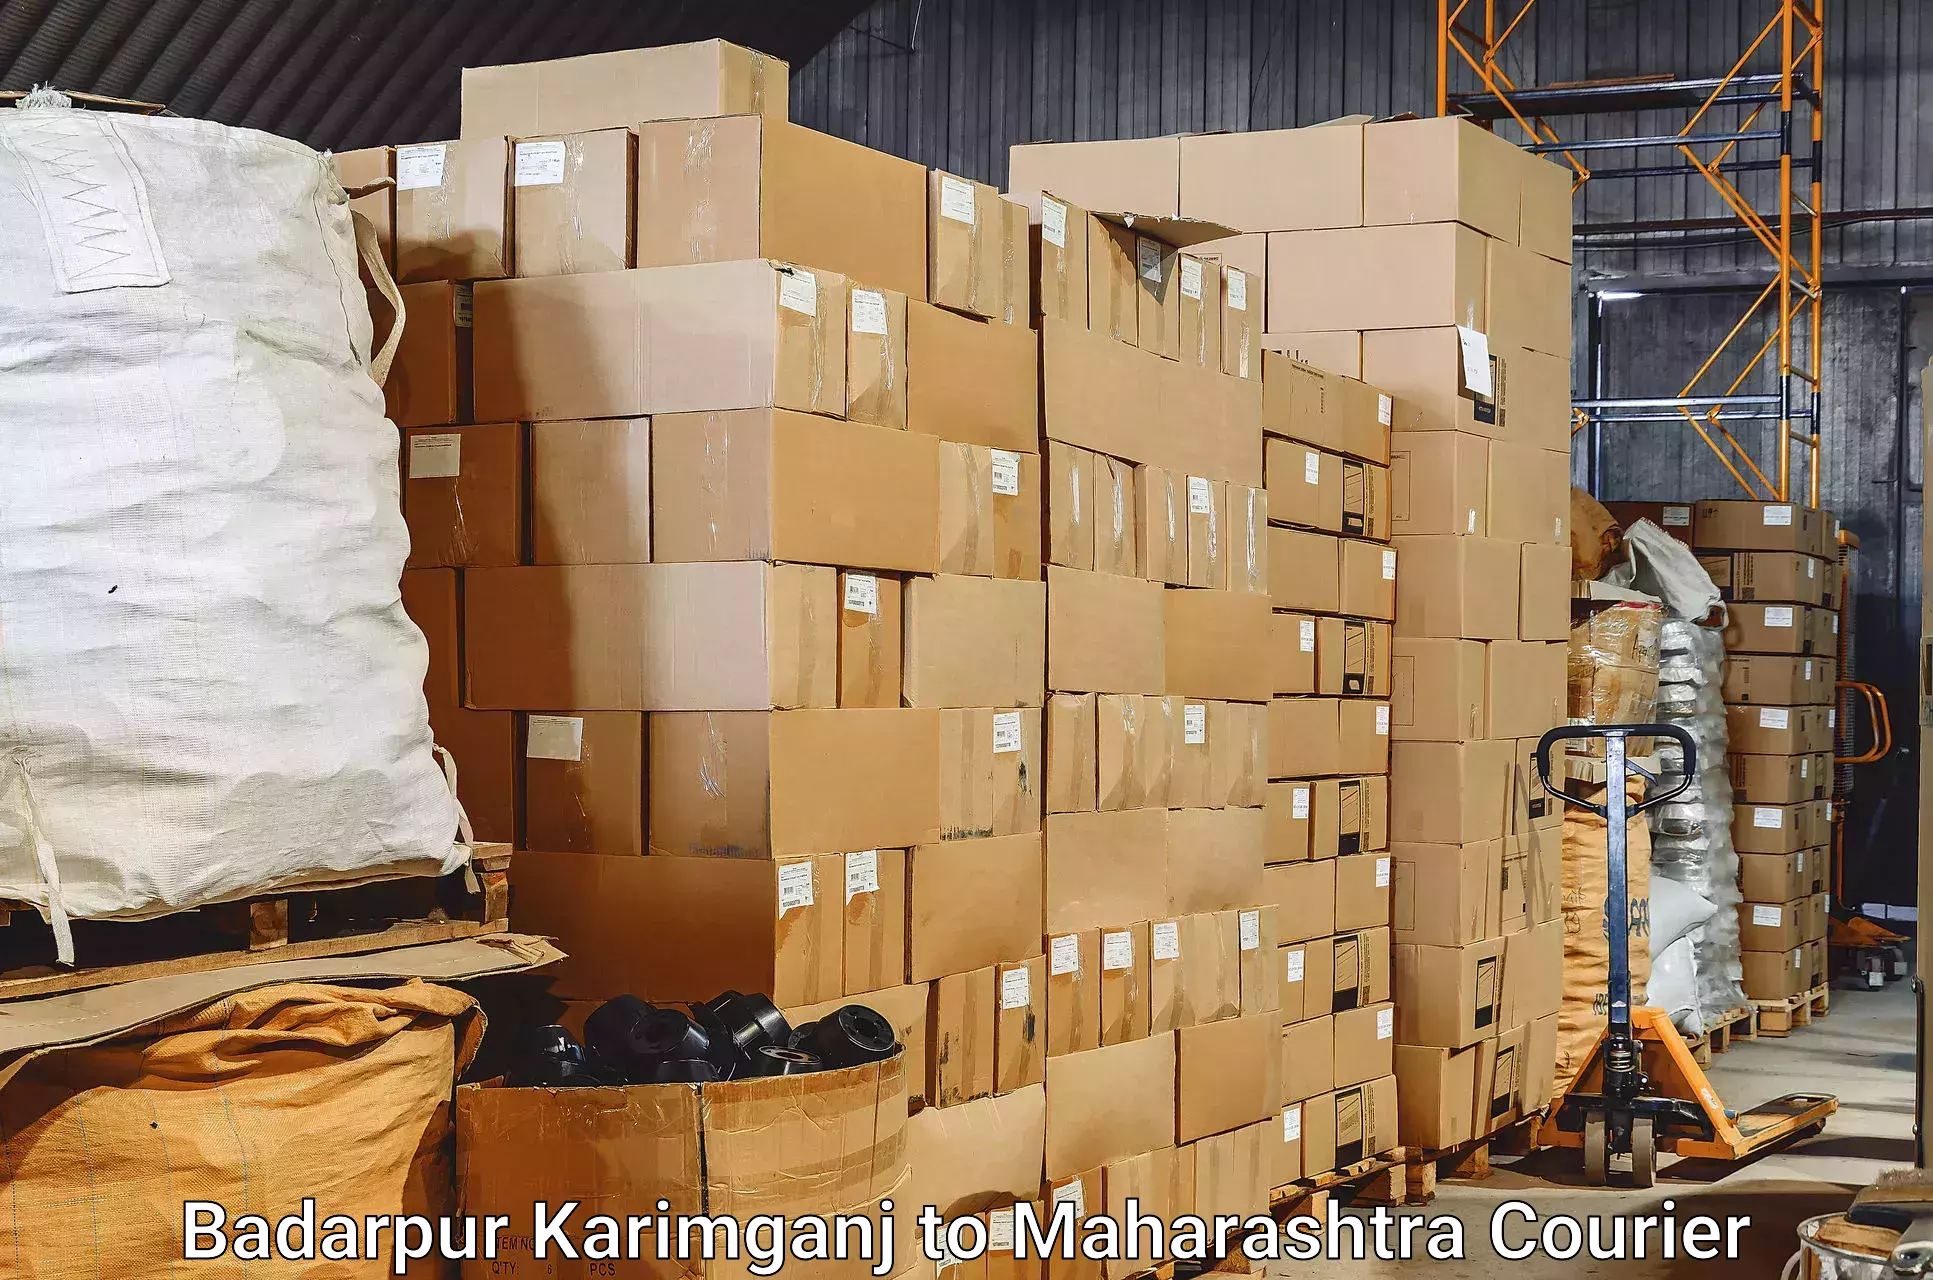 Luggage transport consultancy Badarpur Karimganj to Kudus